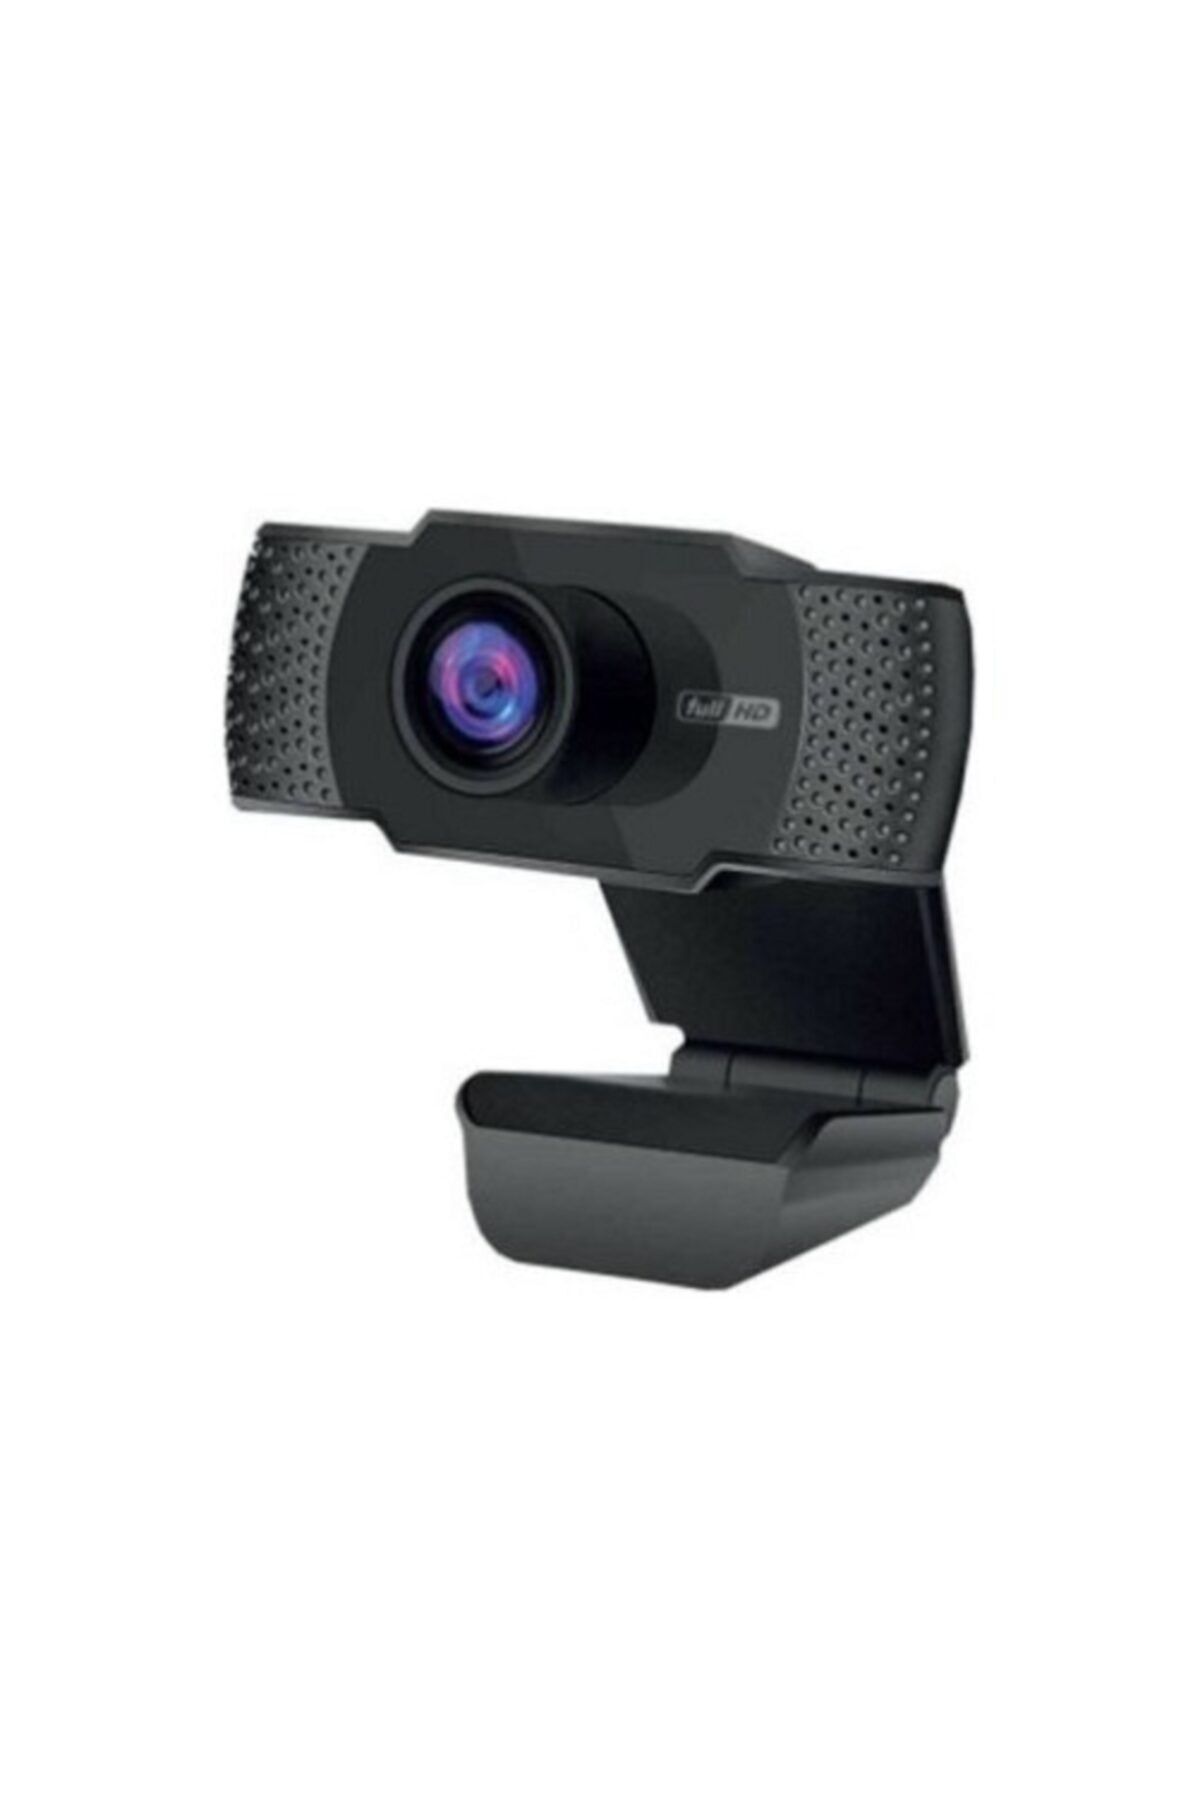 Pirana Piranha 9635 Full Hd Webcam Pc Kamera Dahili Mikrofonlu Bilgisayar Kamerası 1080p